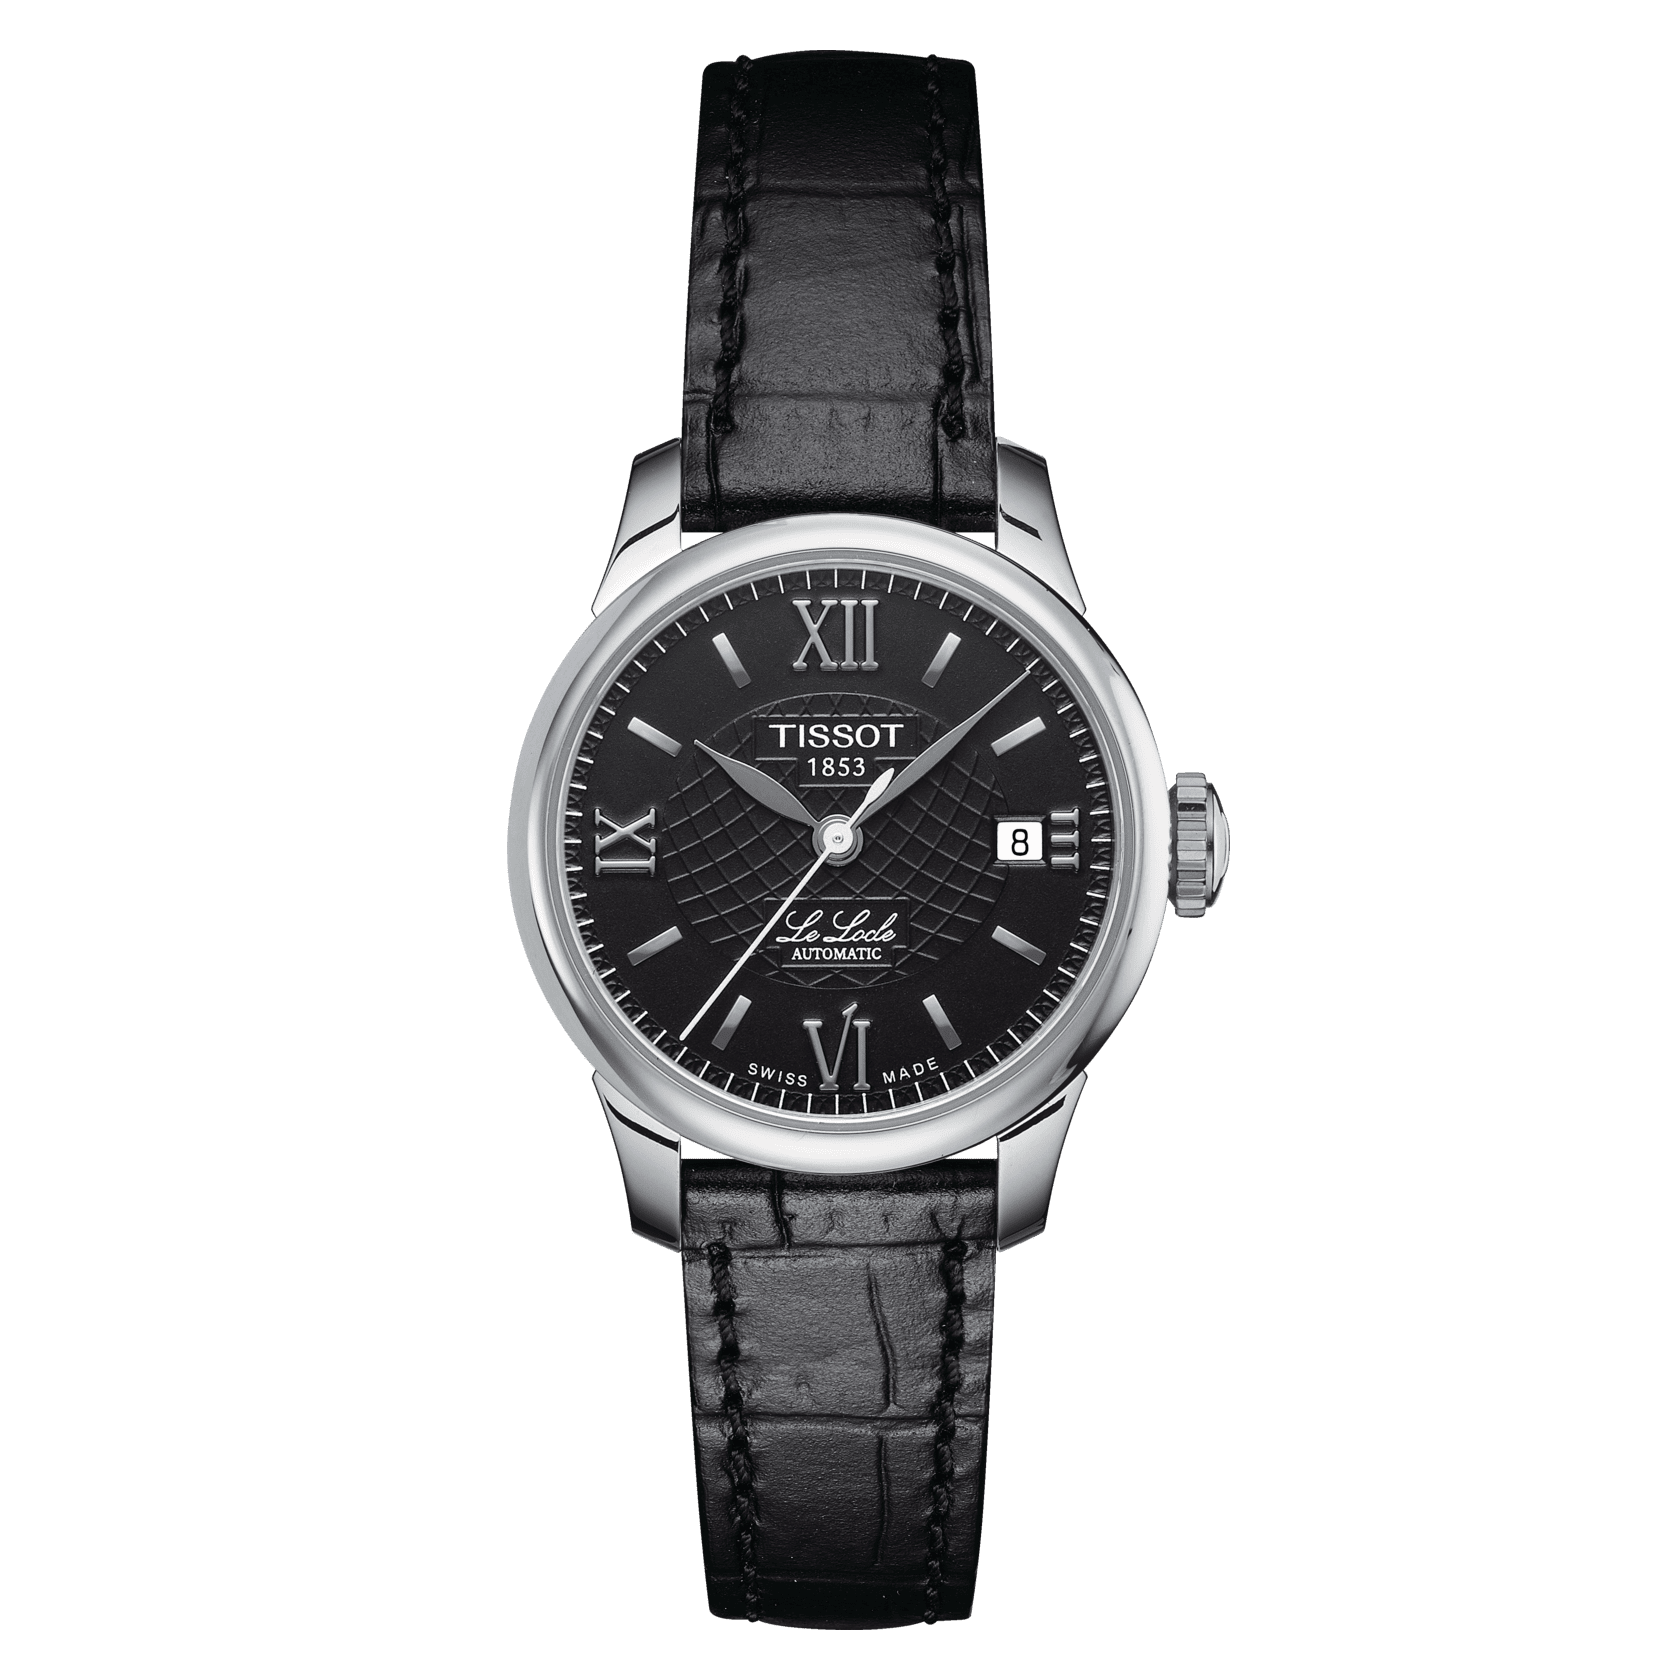 Replica Christian Dior Watch